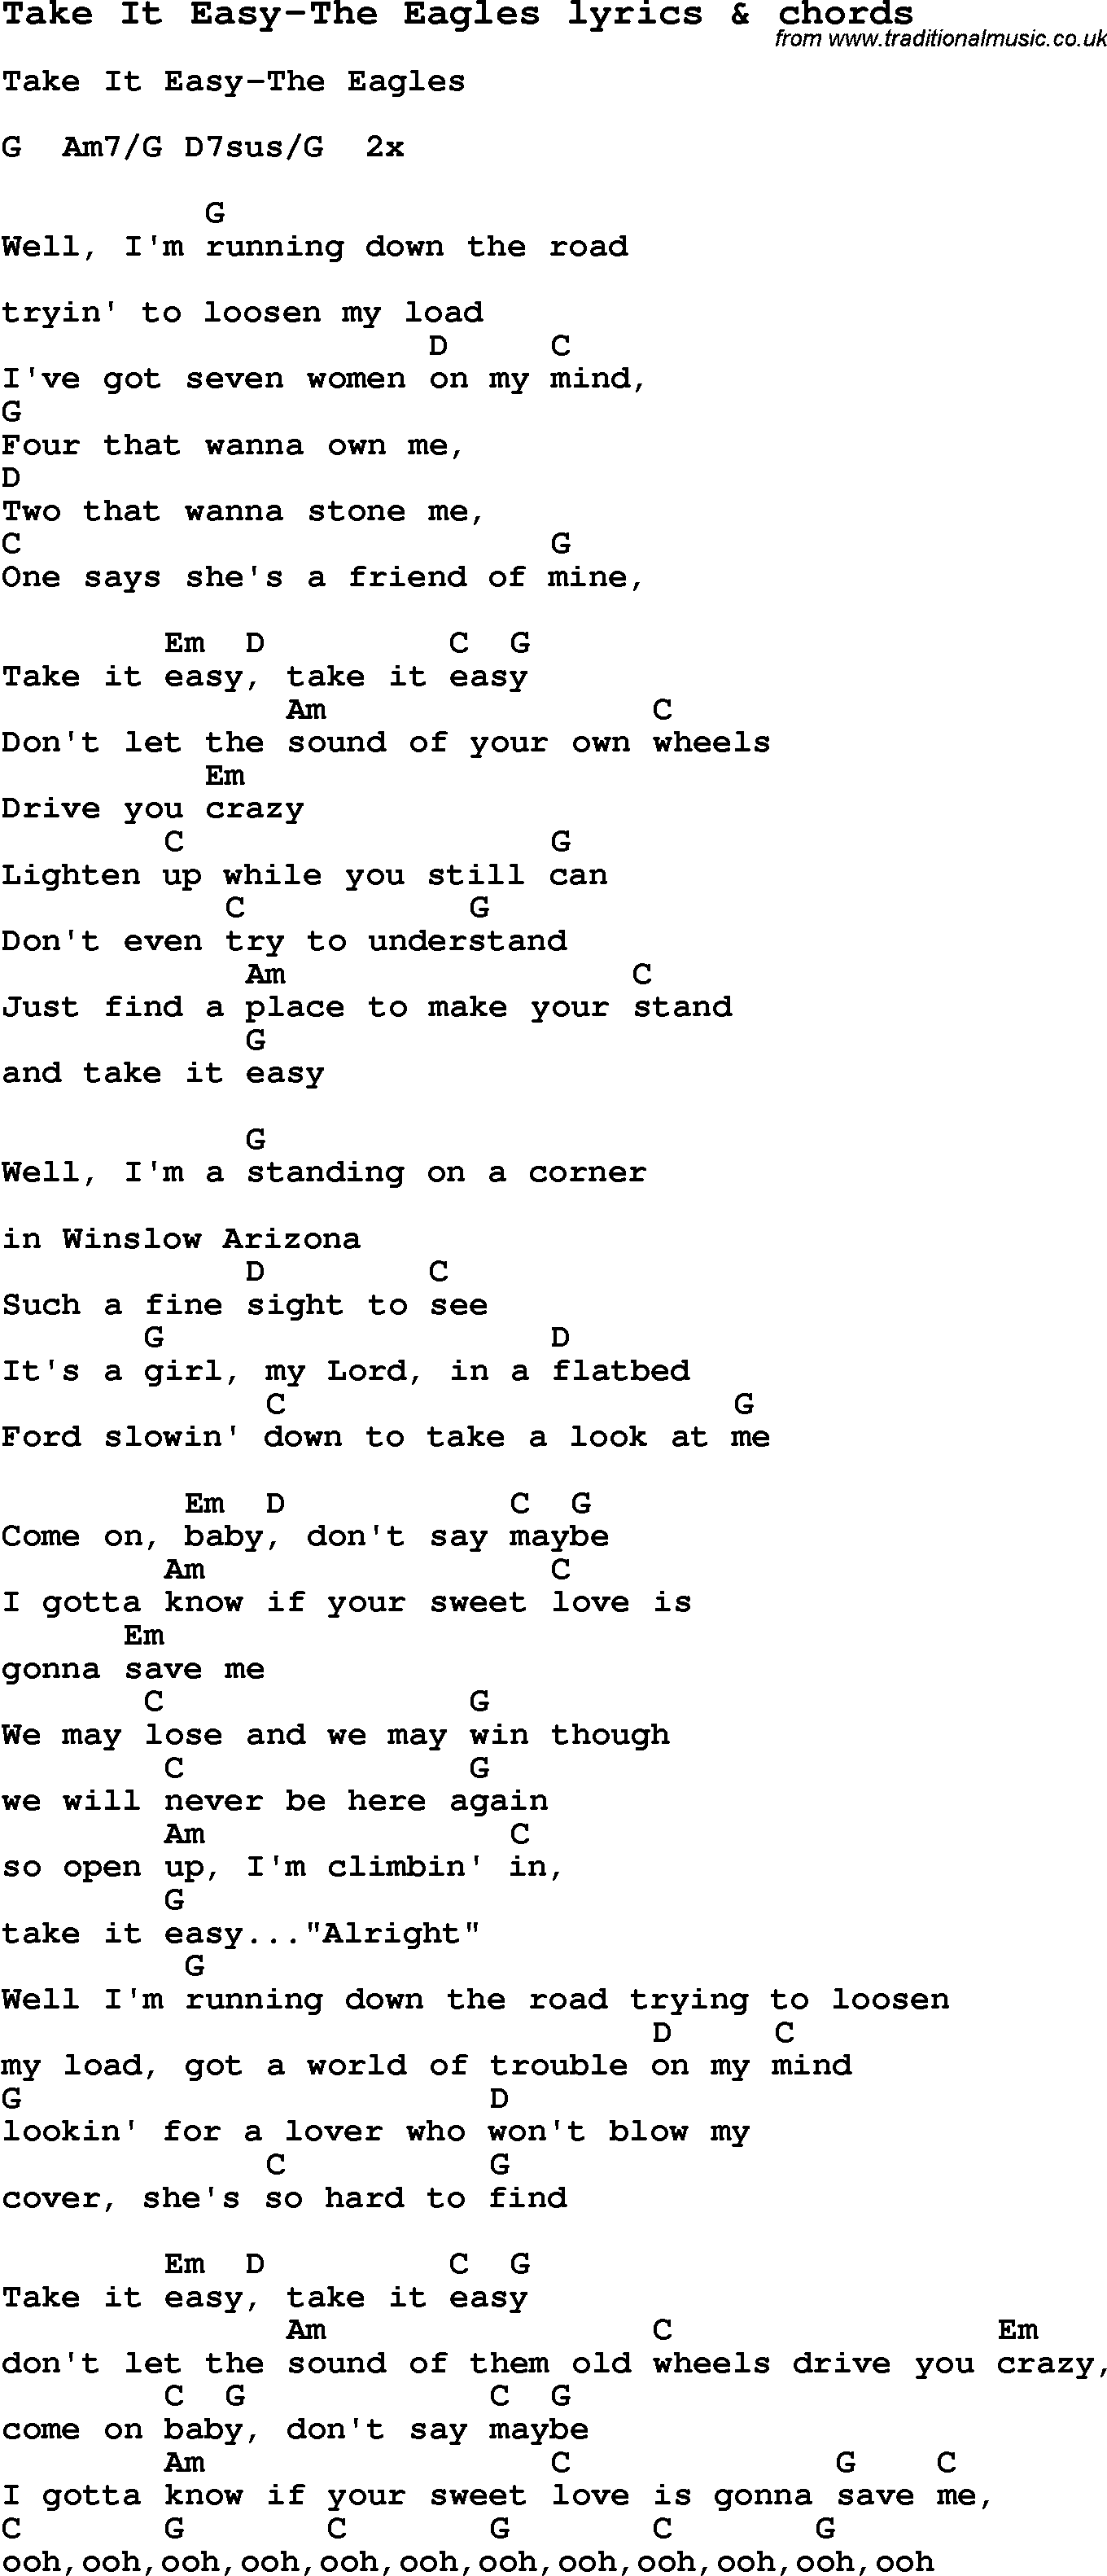 Love Song Lyrics for: Take It Easy-The Eagles with chords for Ukulele, Guitar Banjo etc.